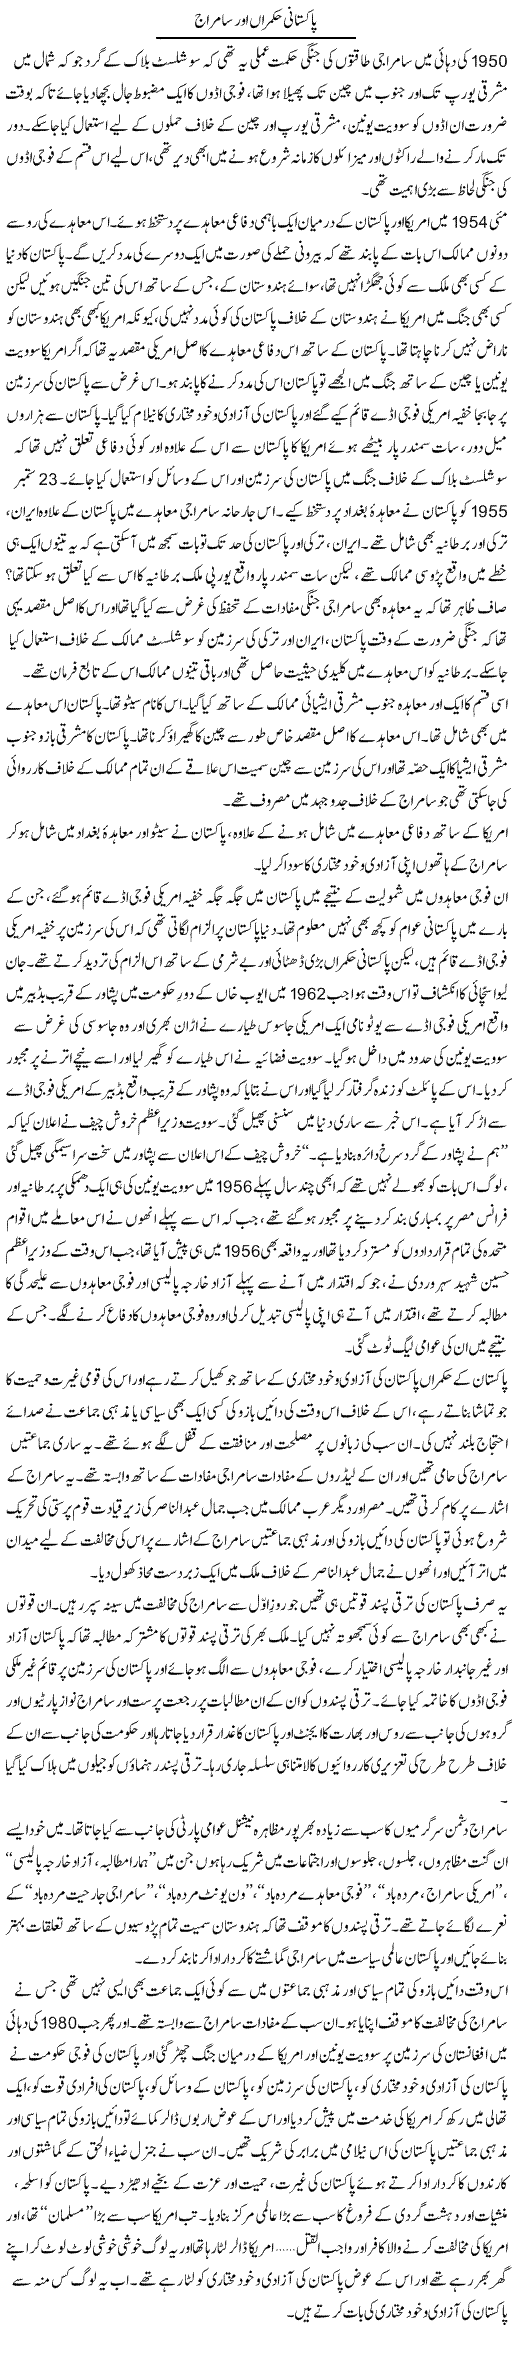 Pakistani Rulers Express Column Anwar Ahsan 24 June 2011